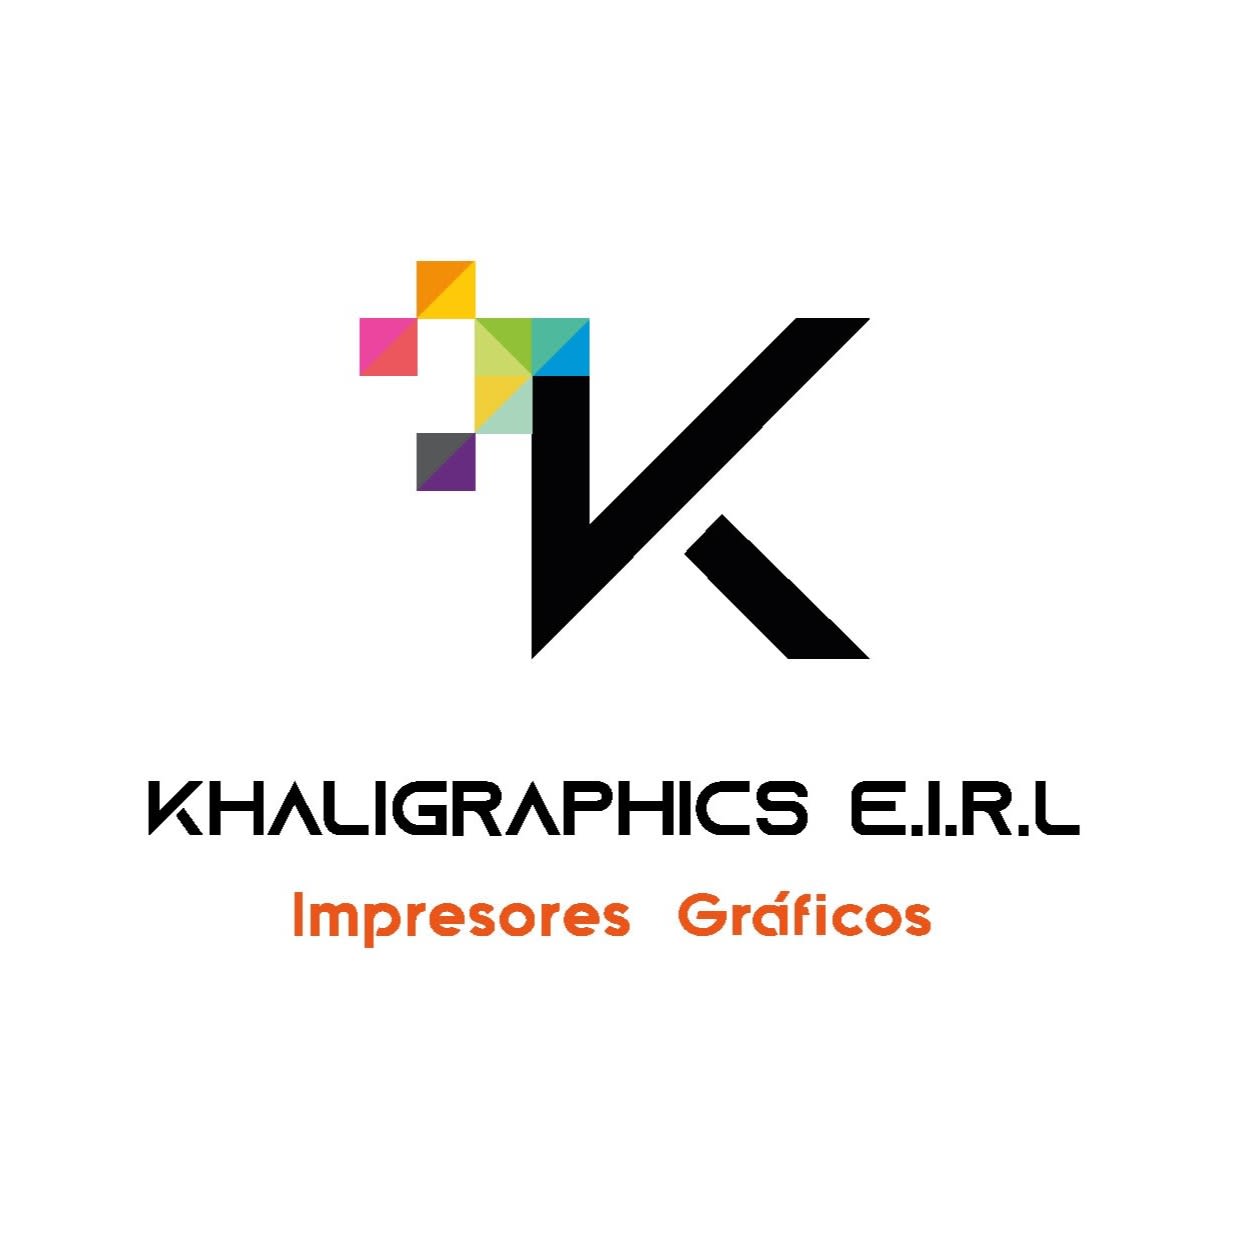 Khaligraphics